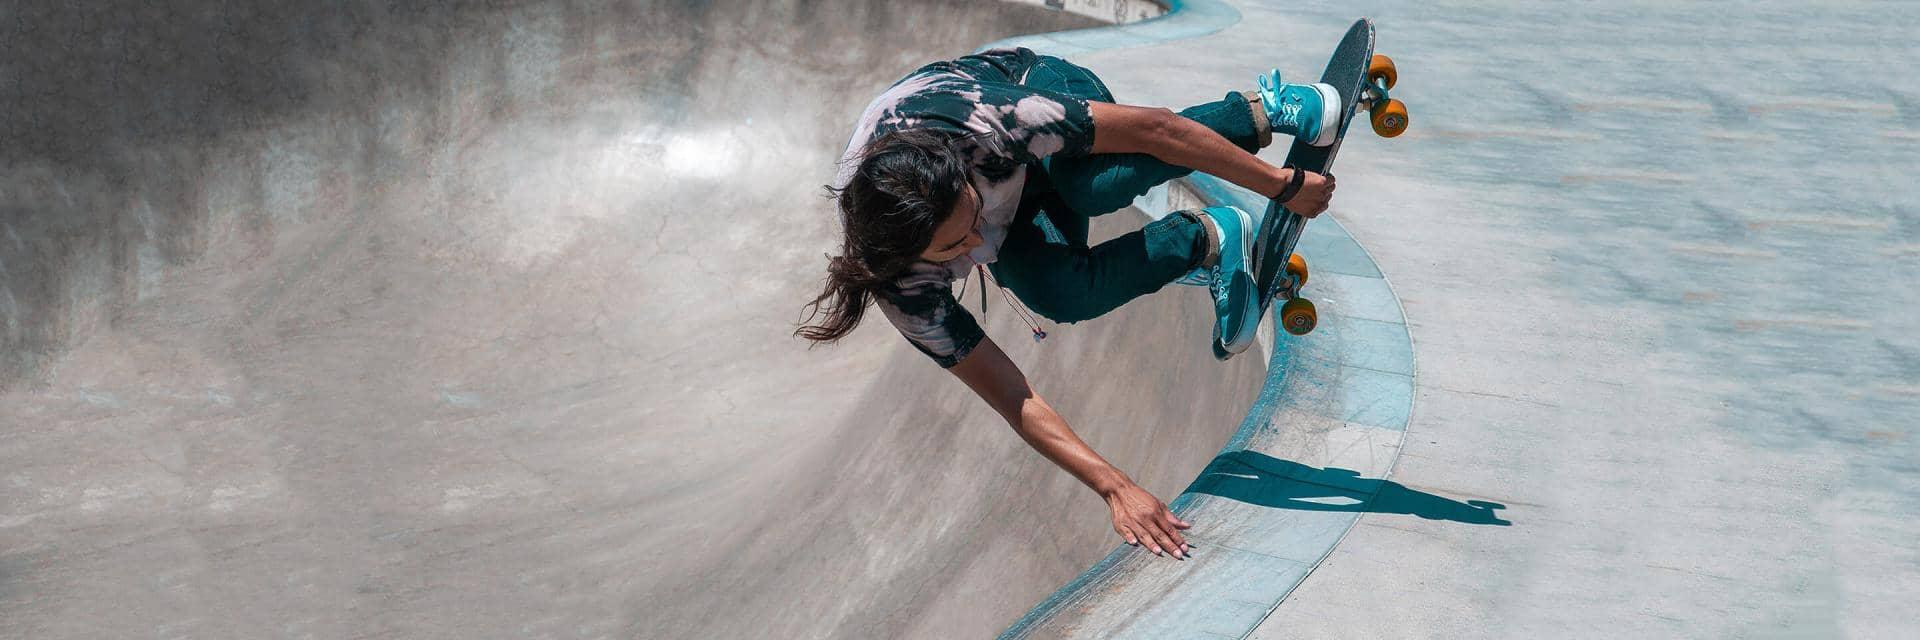 A skateboarder does a trick in a skatepark
